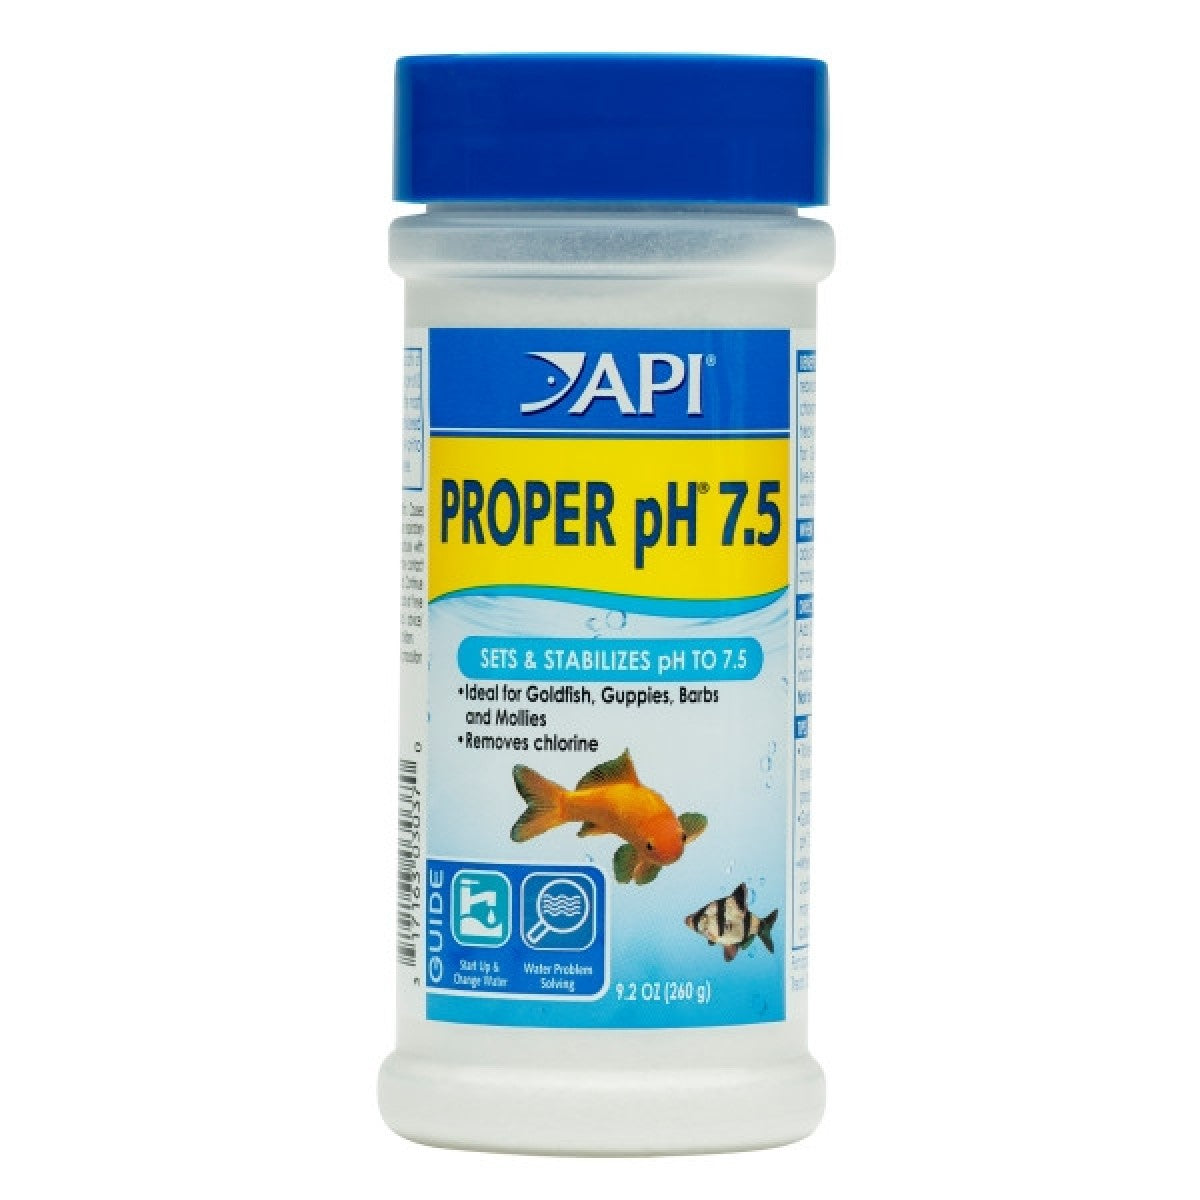 API Proper pH 7.5 Powder, 9.2 OZ